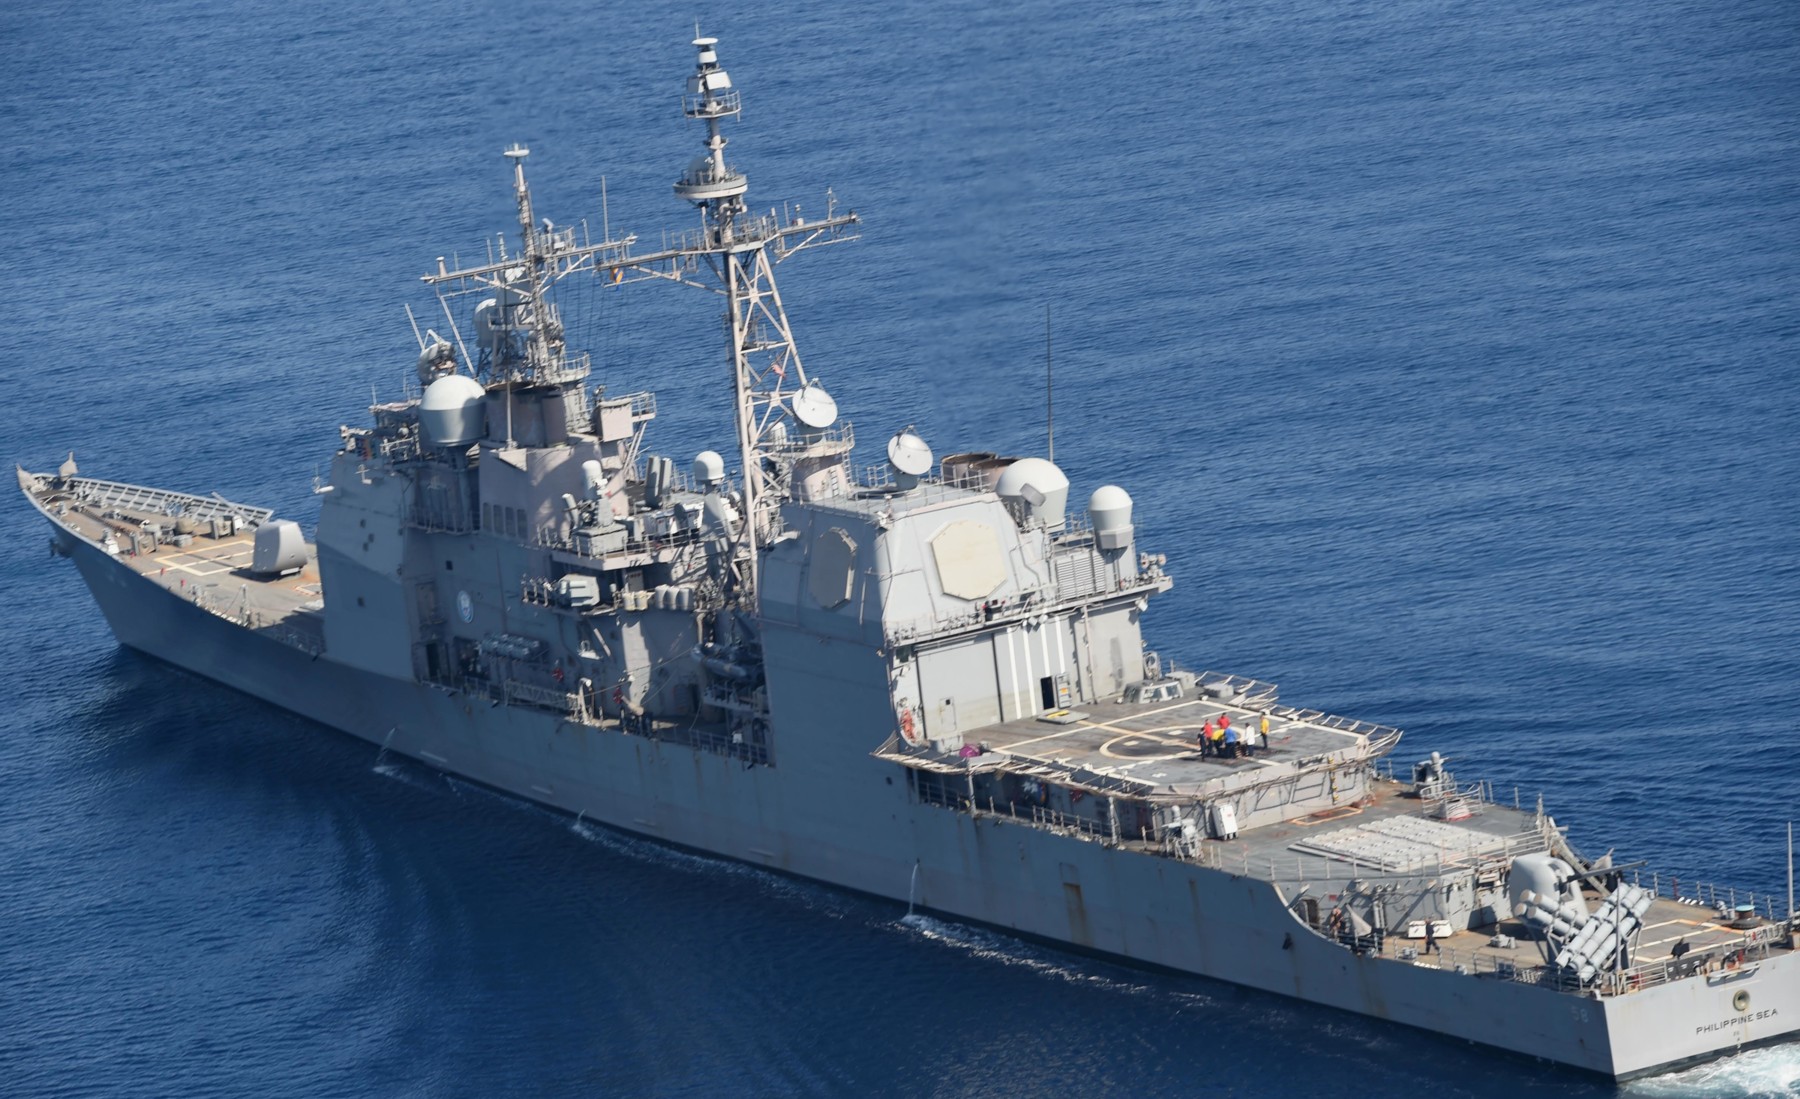 cg-58 uss philippine sea ticonderoga class guided missile cruiser aegis us navy mediterranean sea 63